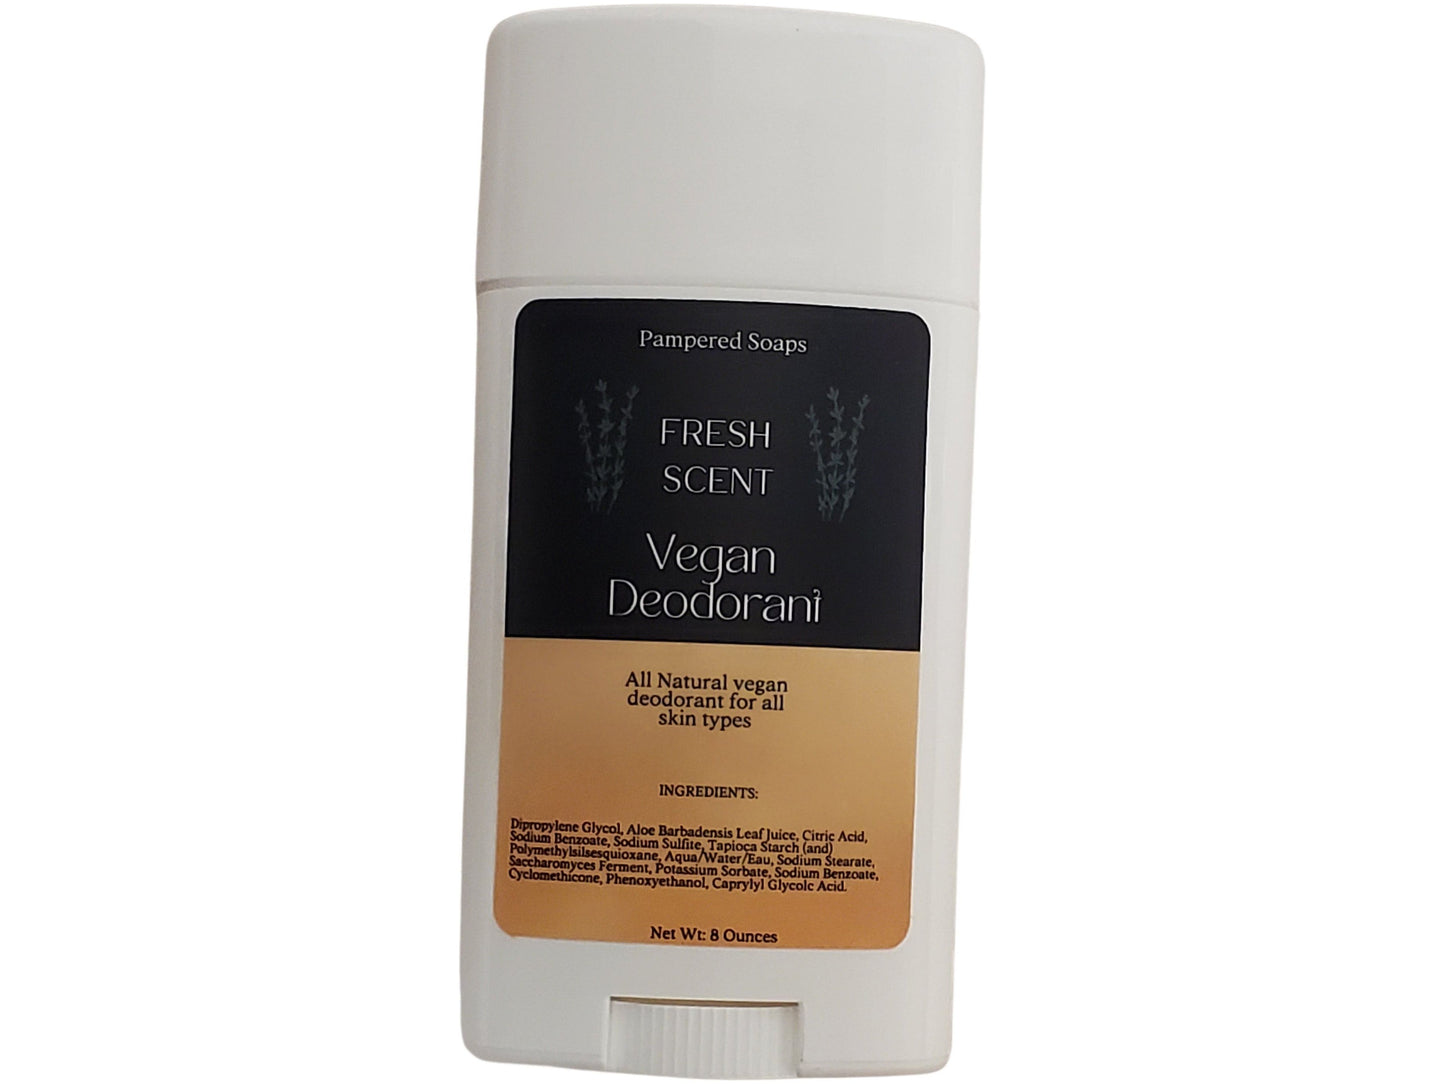 Fresh Scent Vegan Deodorant Pampered Soaps